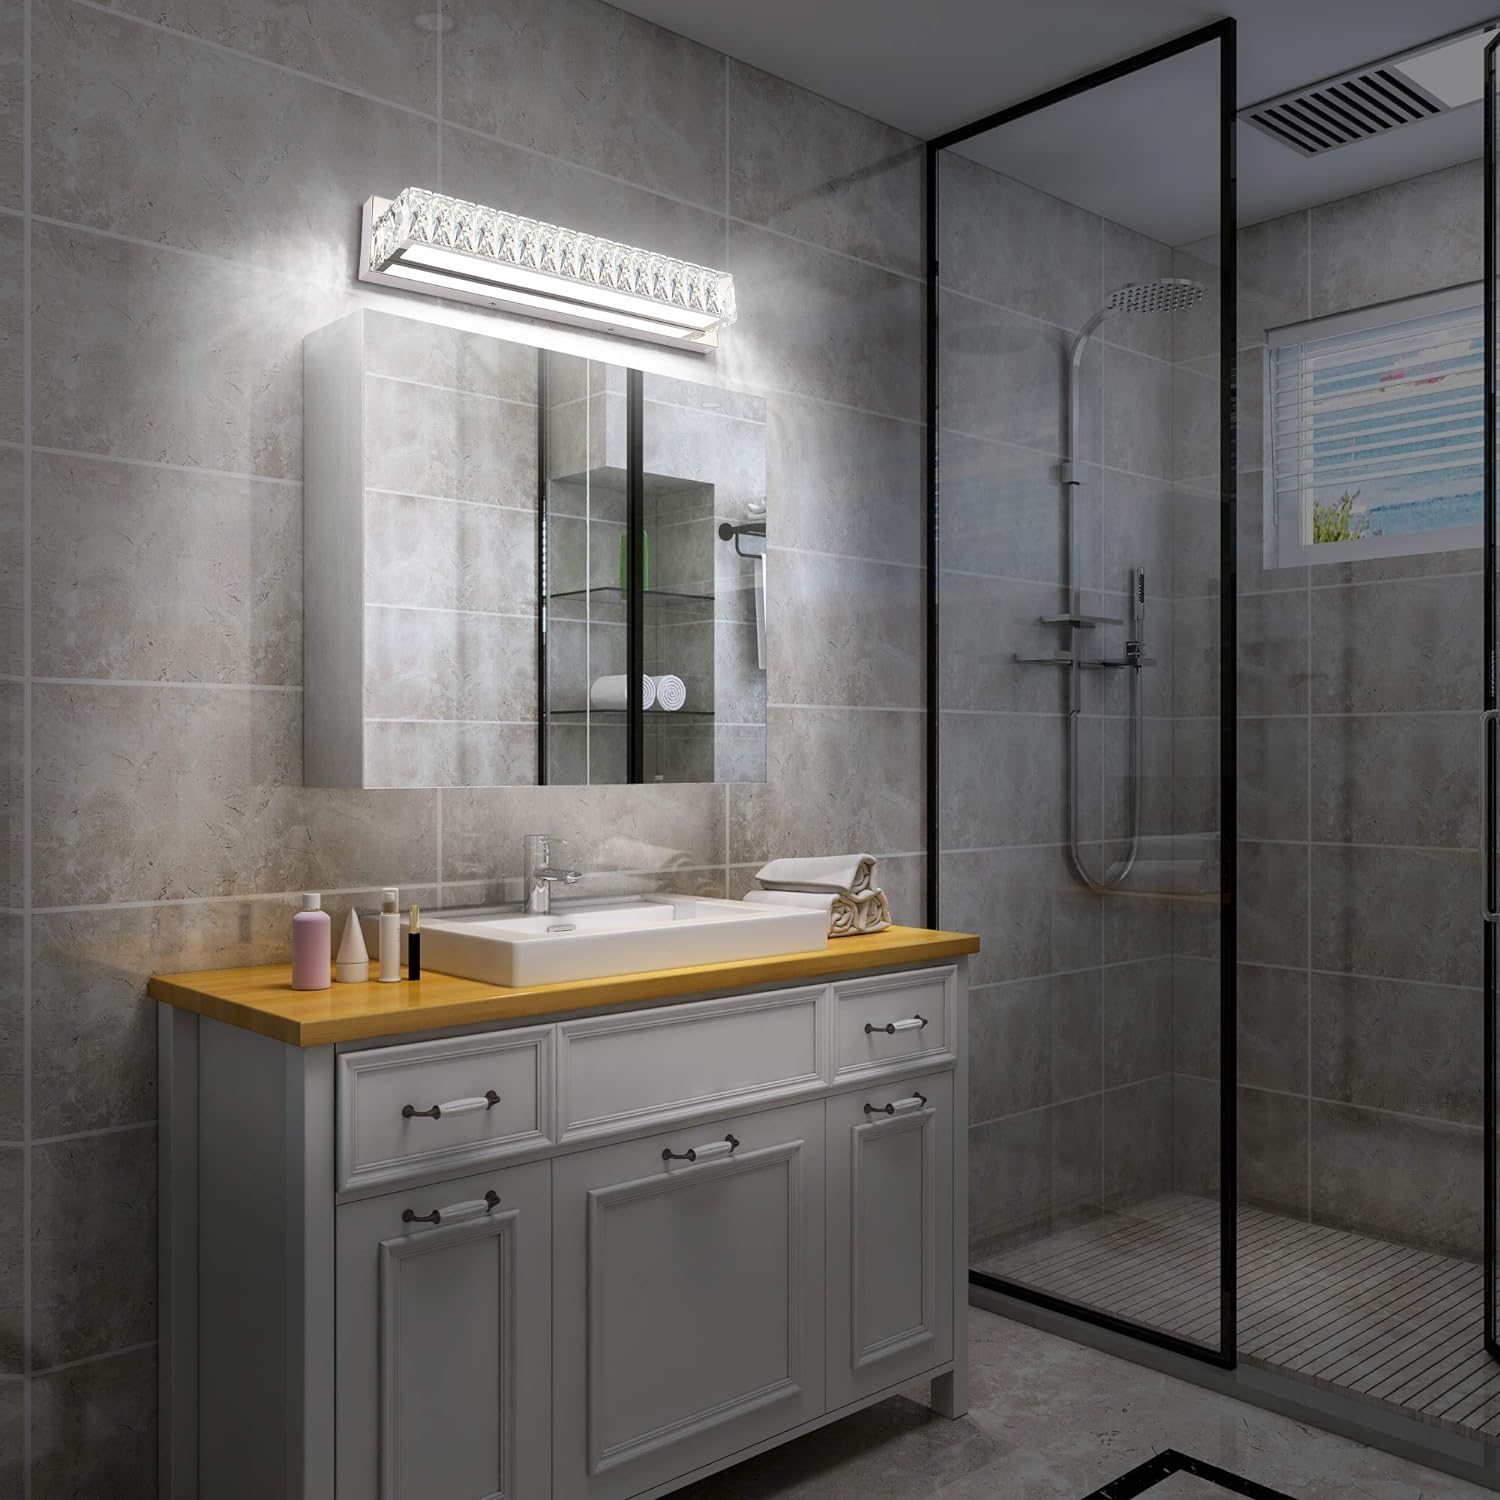 ZUZITO Crystal Bathroom Vanity Lighting Fixtures 7500 Modern LED Vanity Lights Over Mirror White Light